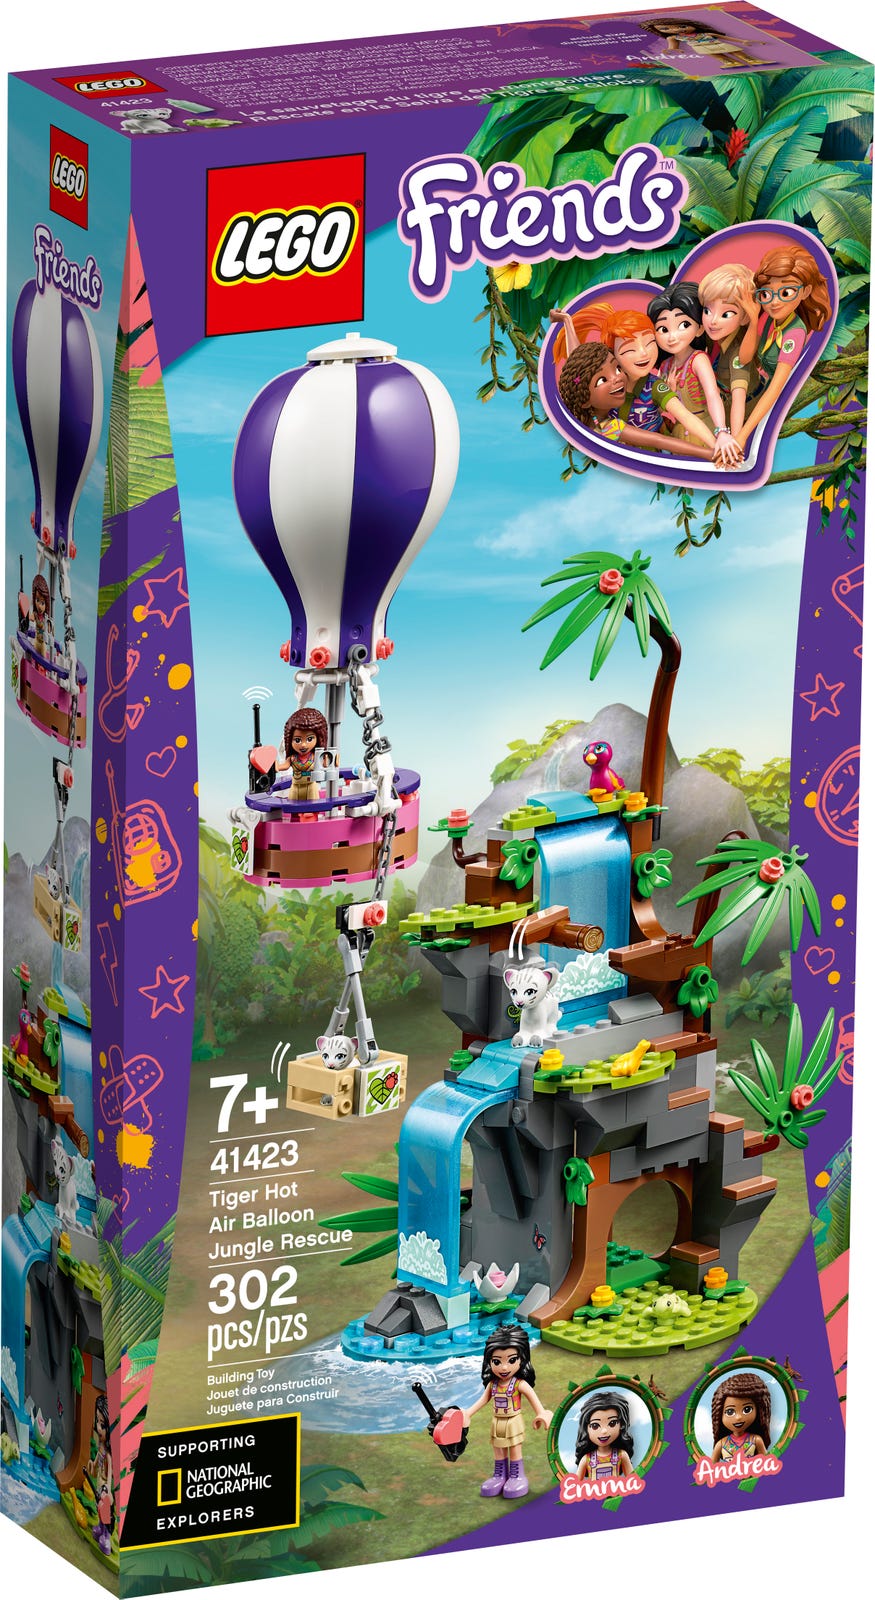 LEGO Friends Tiger Hot Air Balloon Jungle Rescue 41423